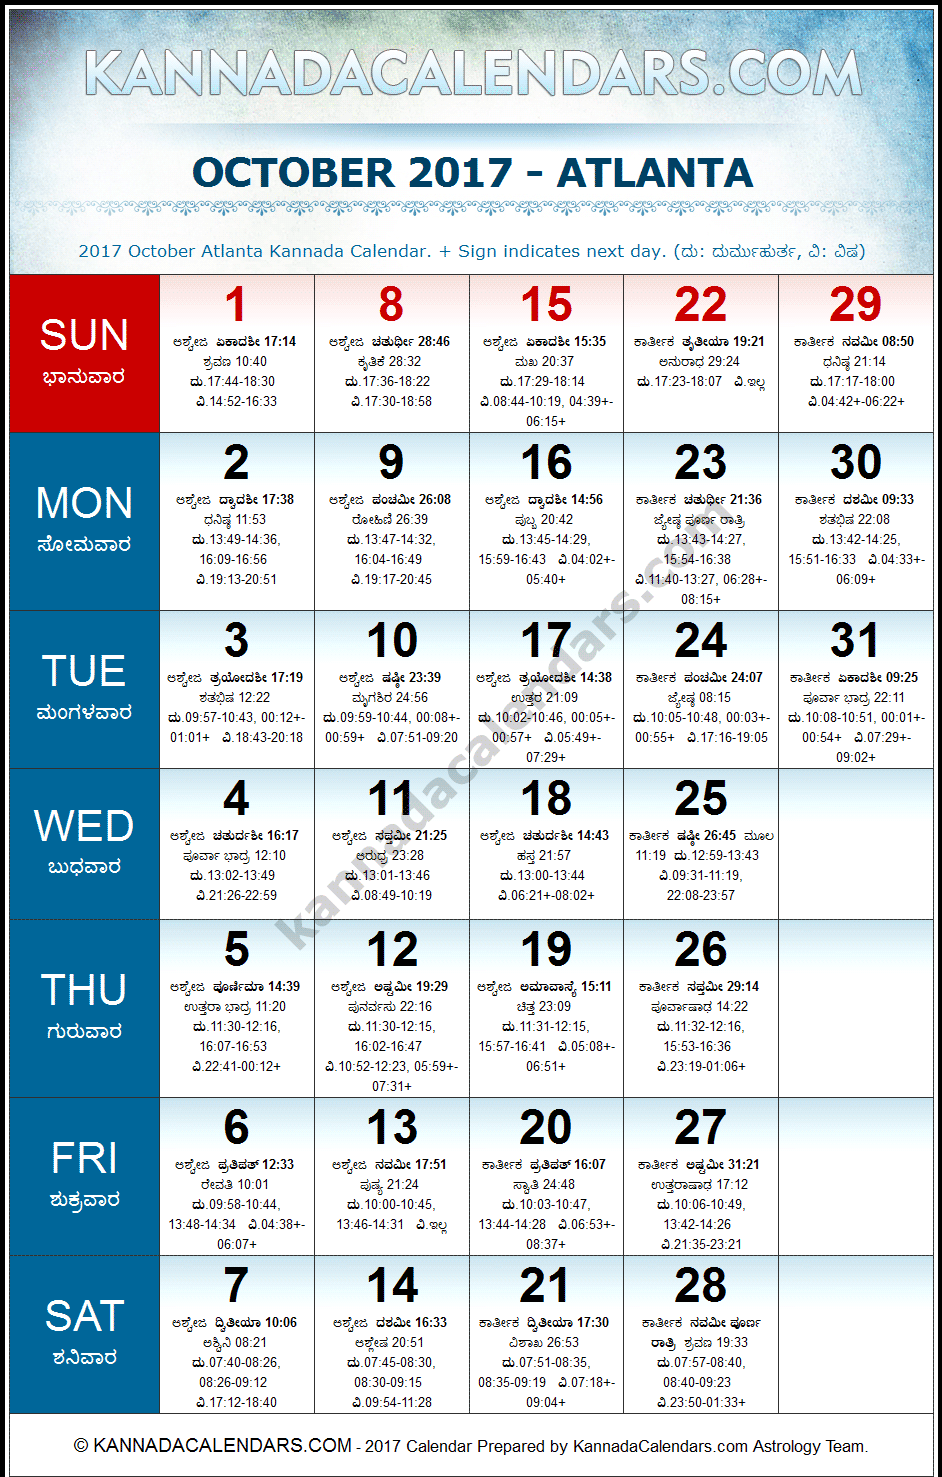 October 2017 Kannada Calendar for Atlanta, USA